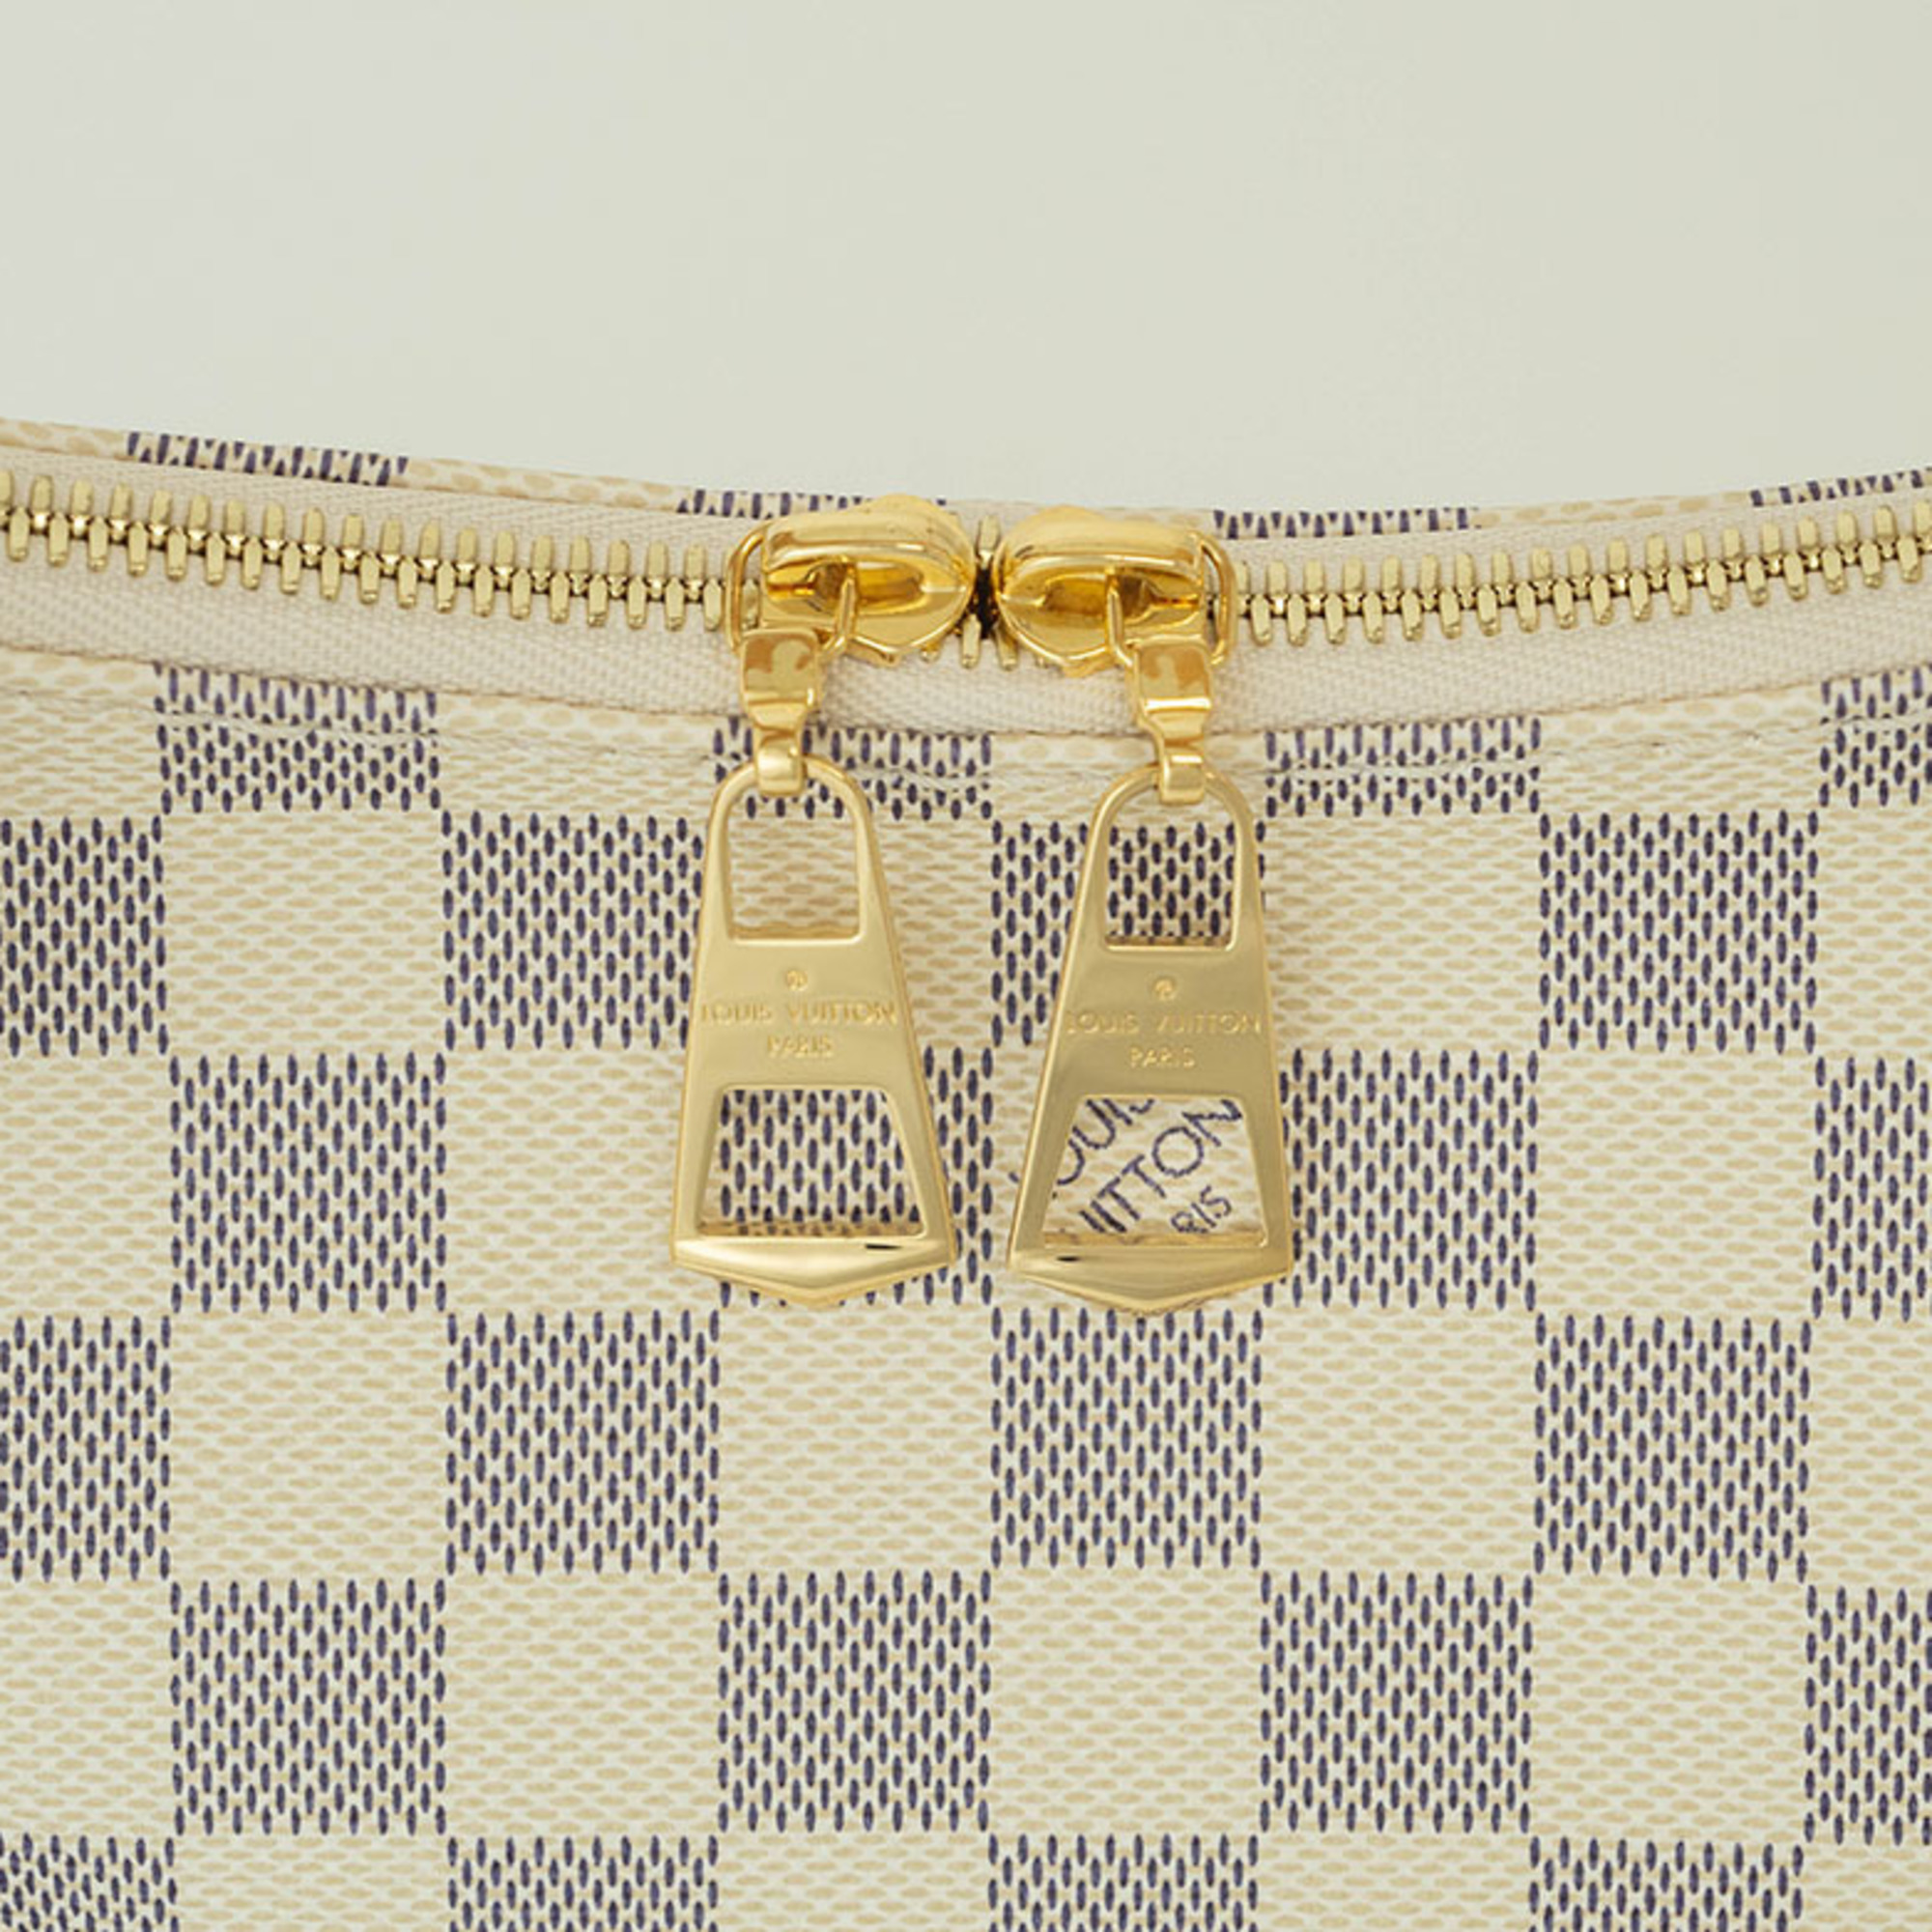 Louis Vuitton Remington Tote Bag Damier Azur N40022 Women's LOUIS VUITTON